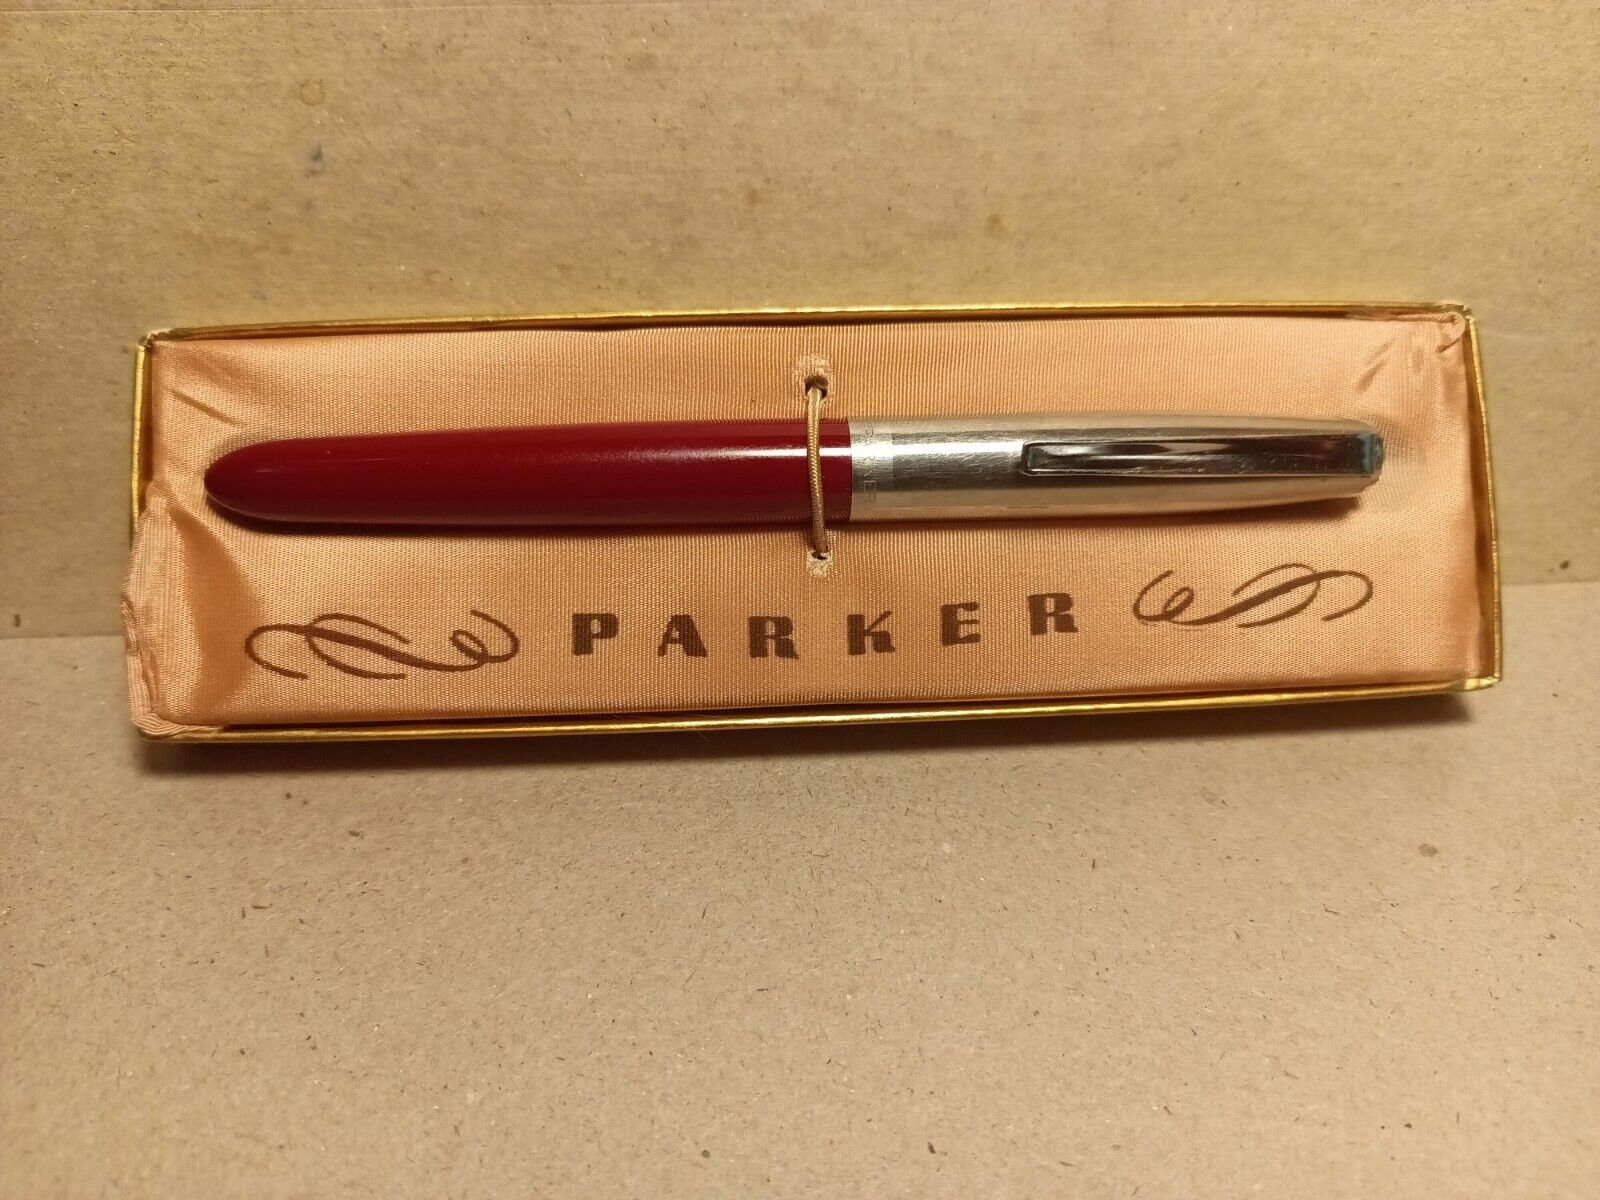 Vintage Red Parker 21 Fountain Pen with Chrome Cap